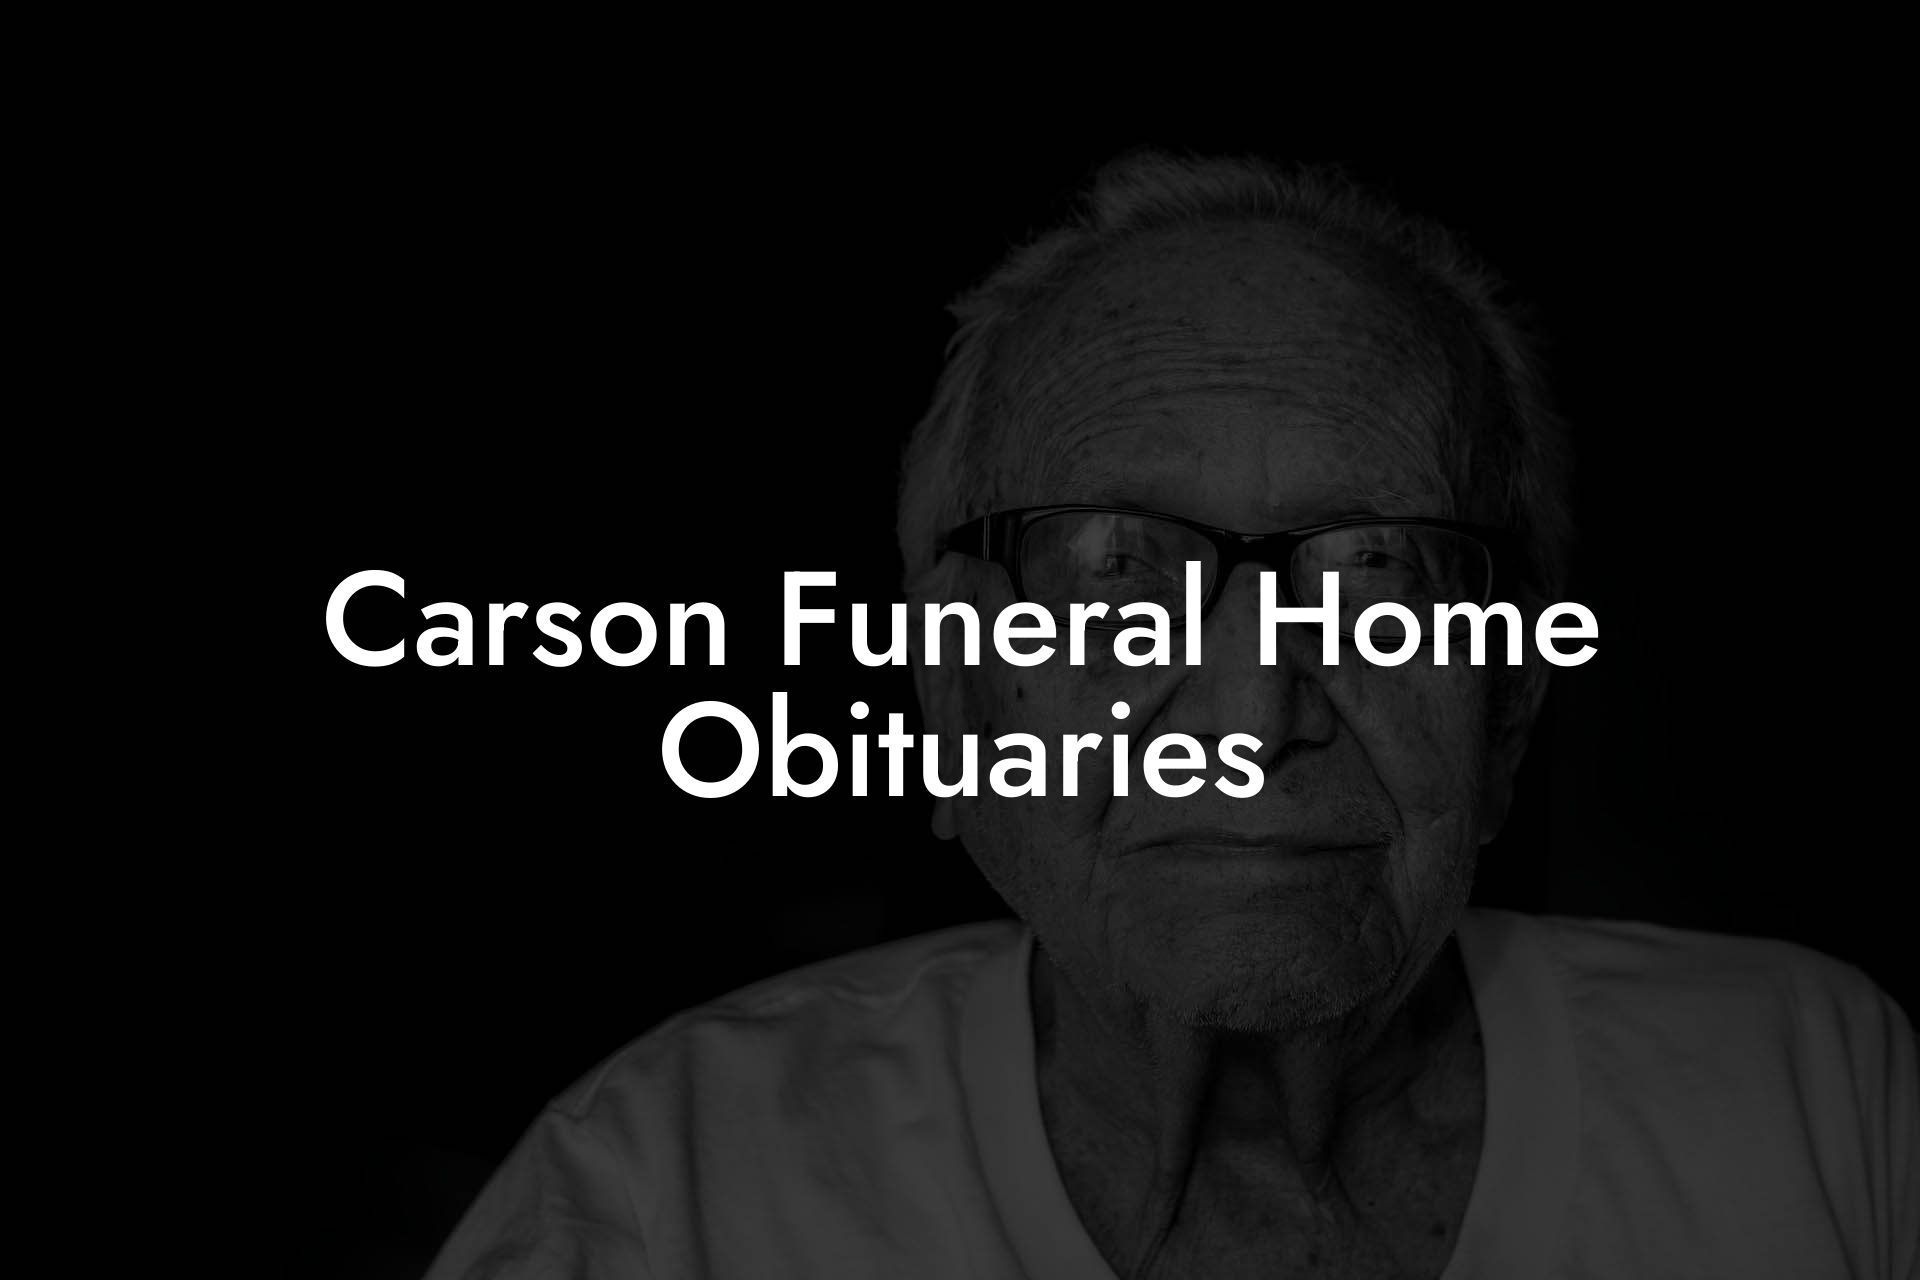 Carson Funeral Home Obituaries